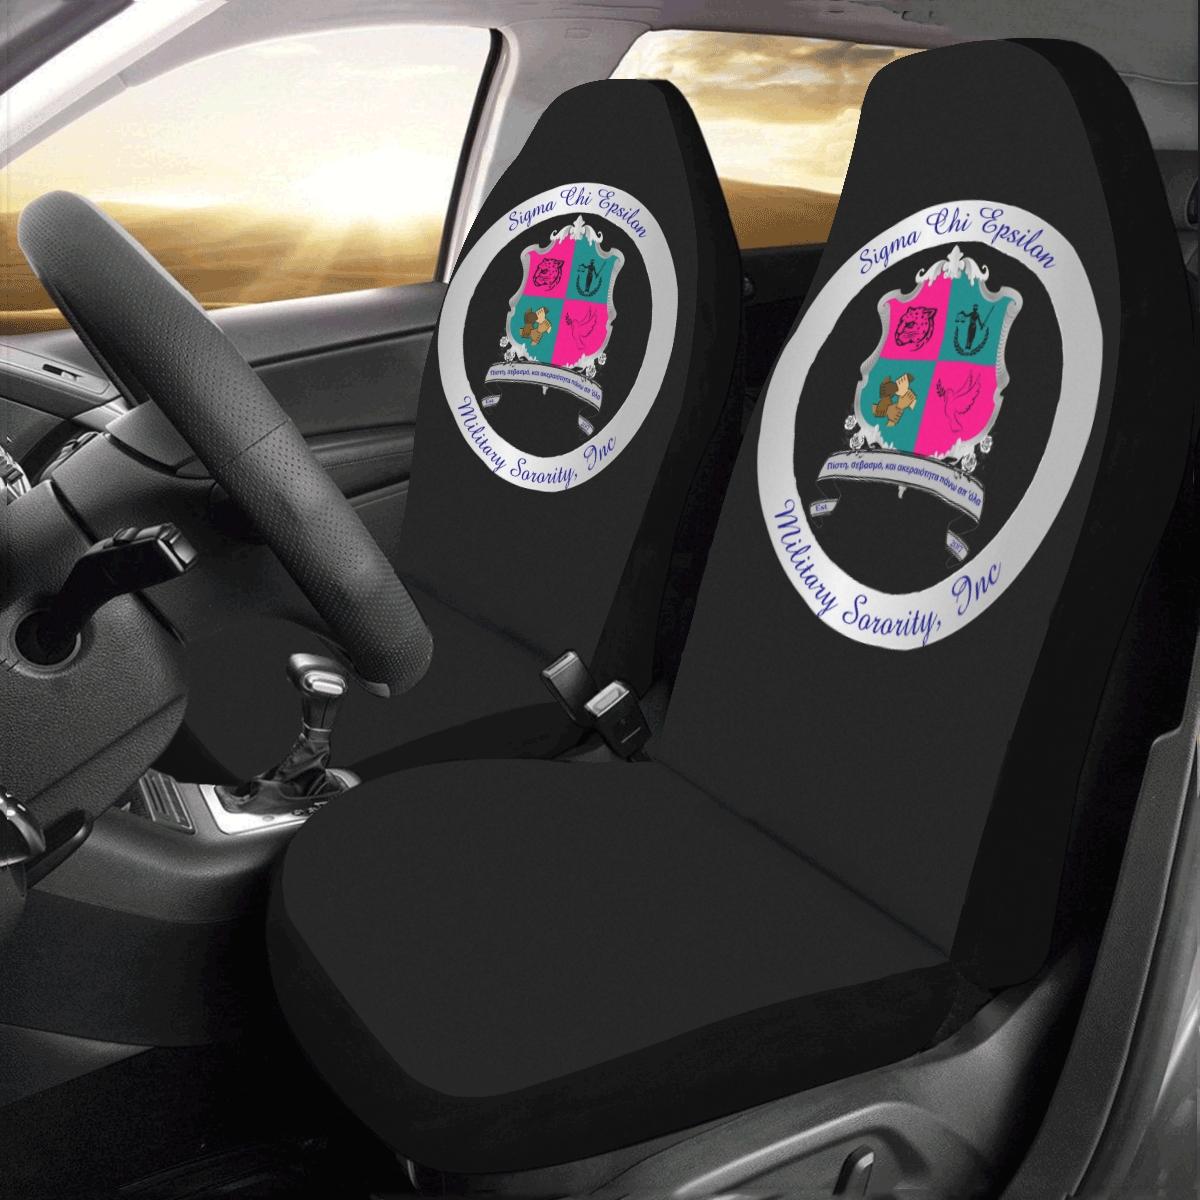 Sigma Chi Epsilon Car Seat Covers (Set of 2)